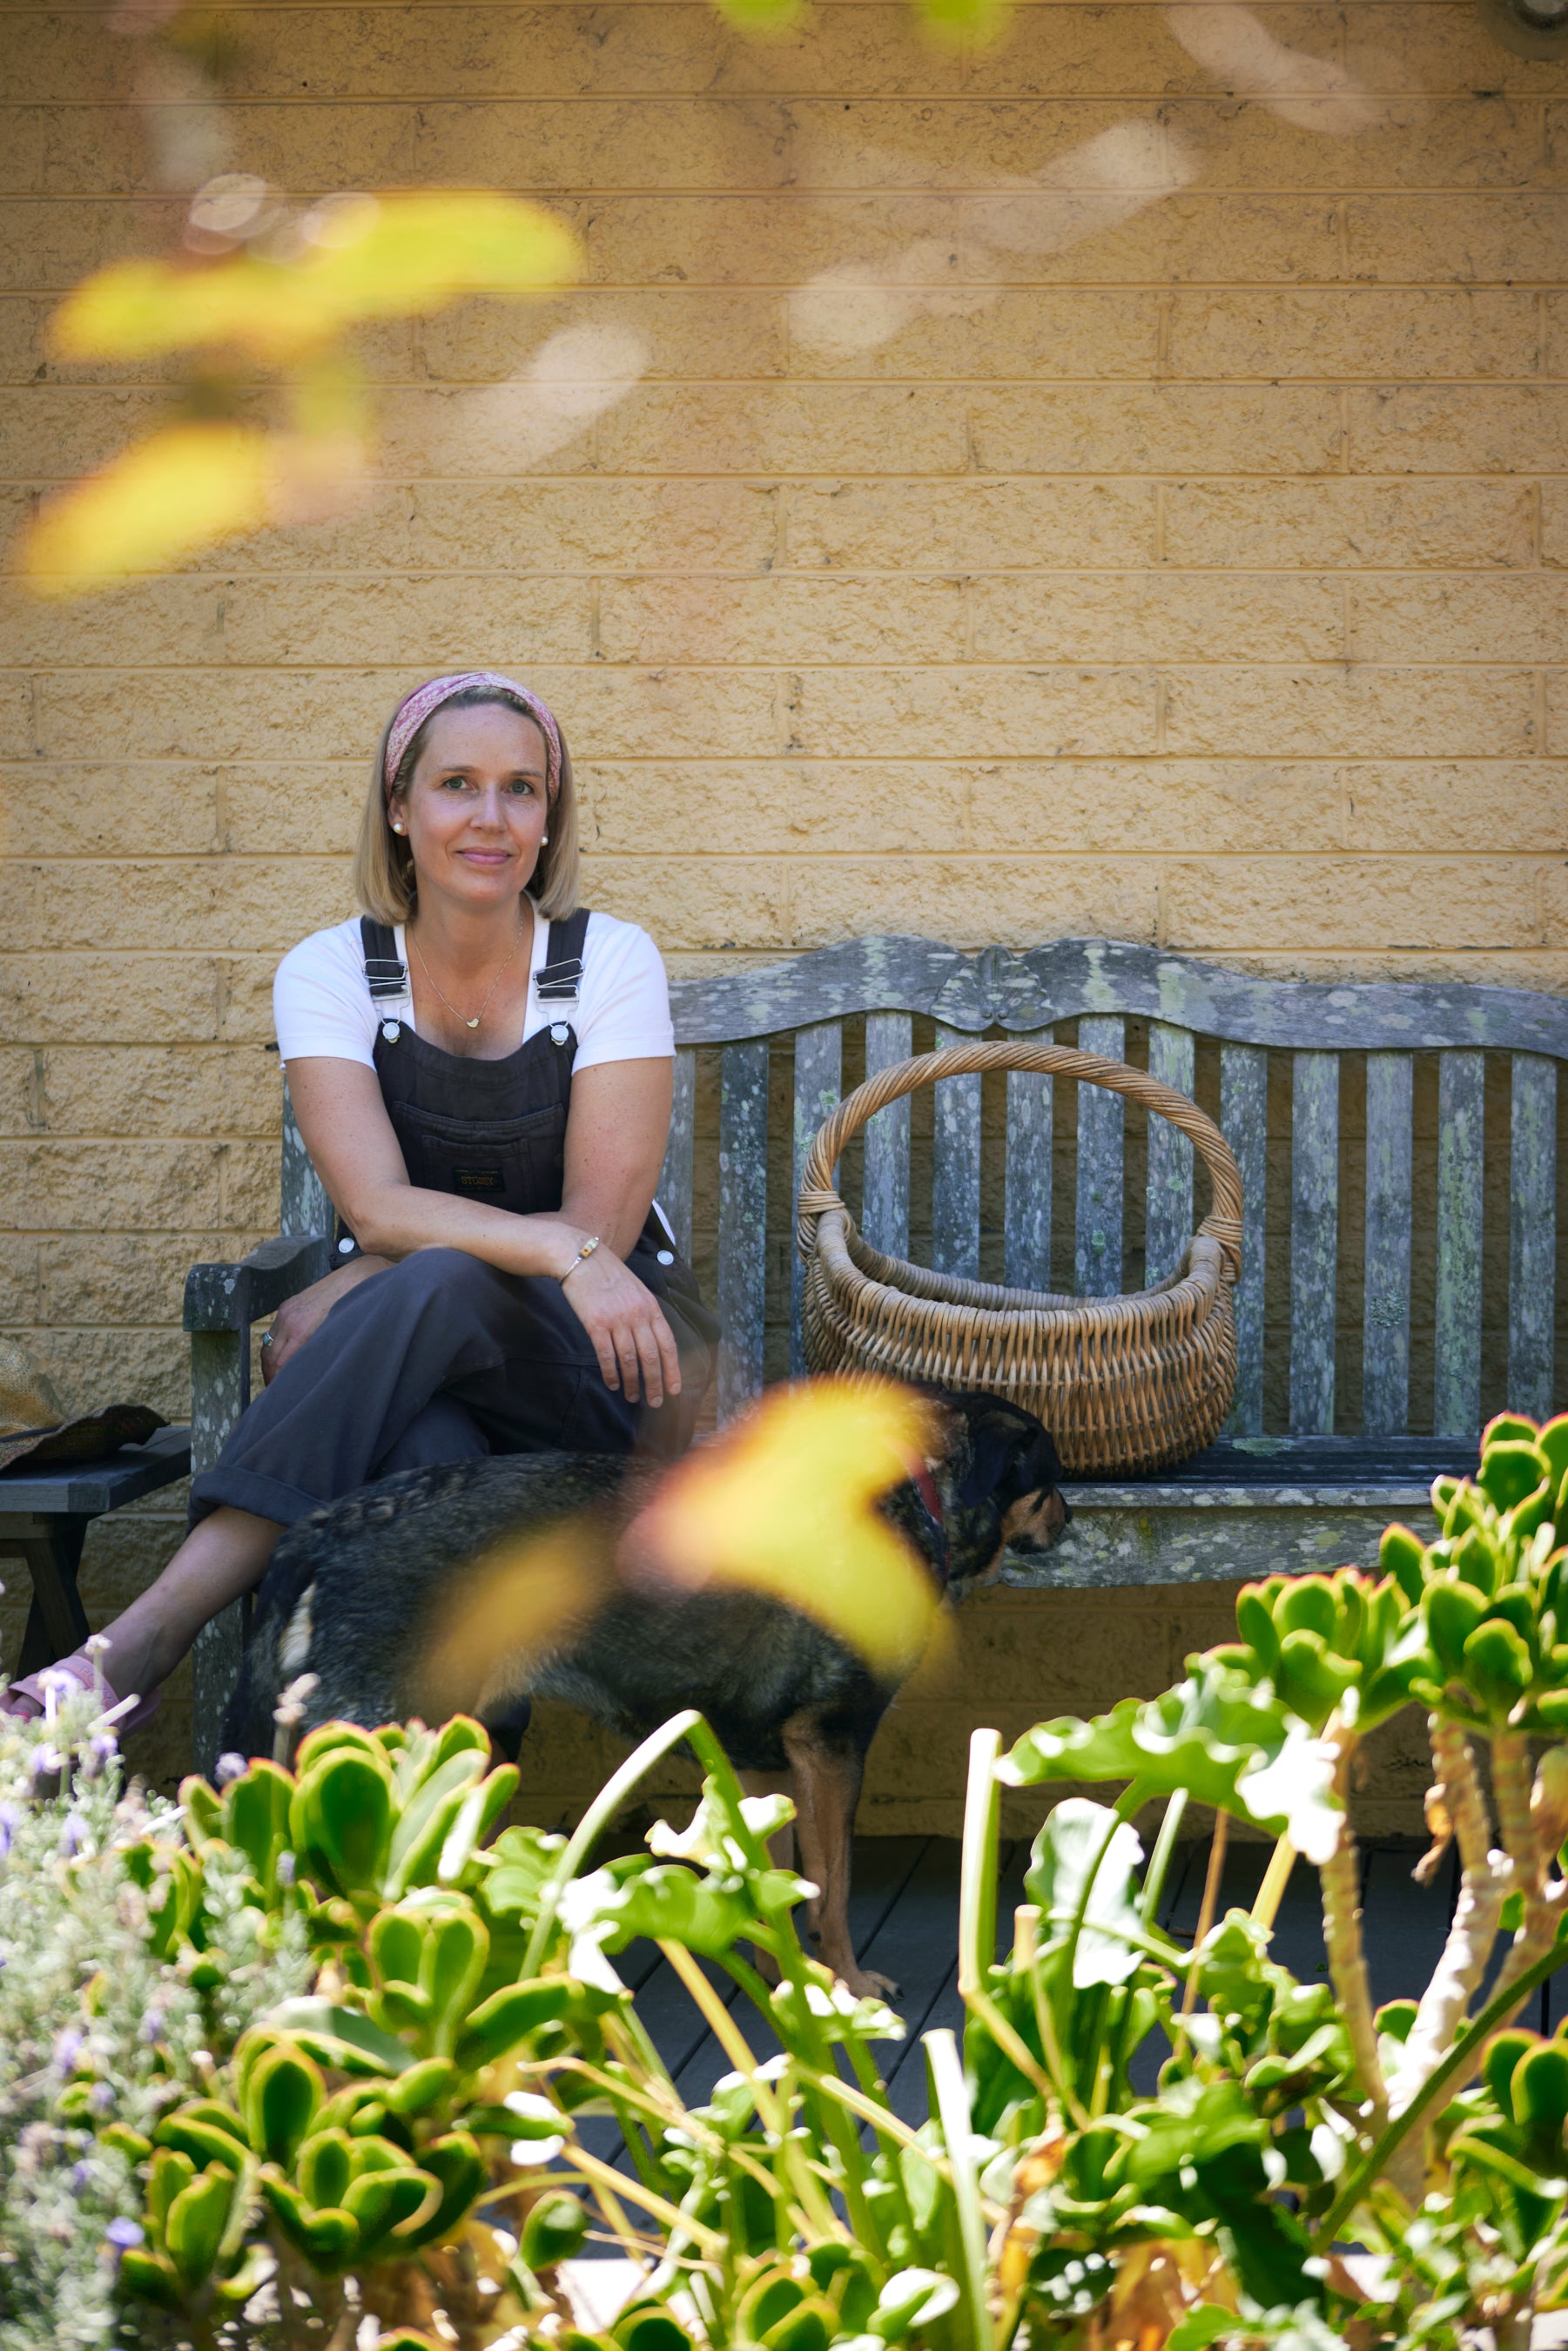 Pollys Farm founder Kimberley Kidger on bench seat in garden